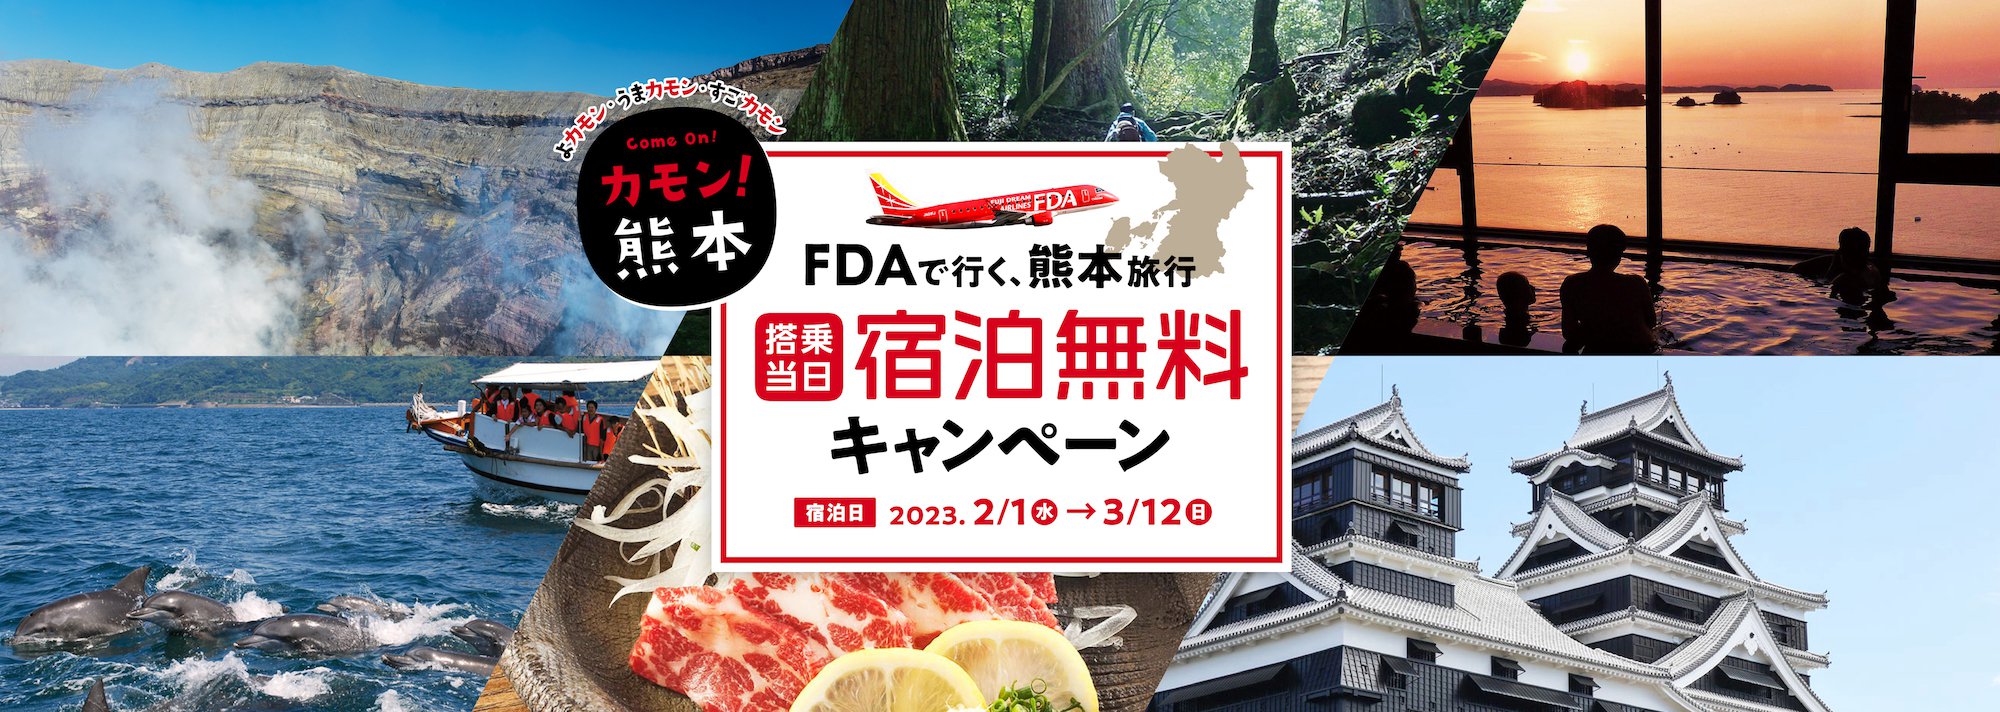 FDAで行く、熊本旅行搭乗当日宿泊無料キャンペーン